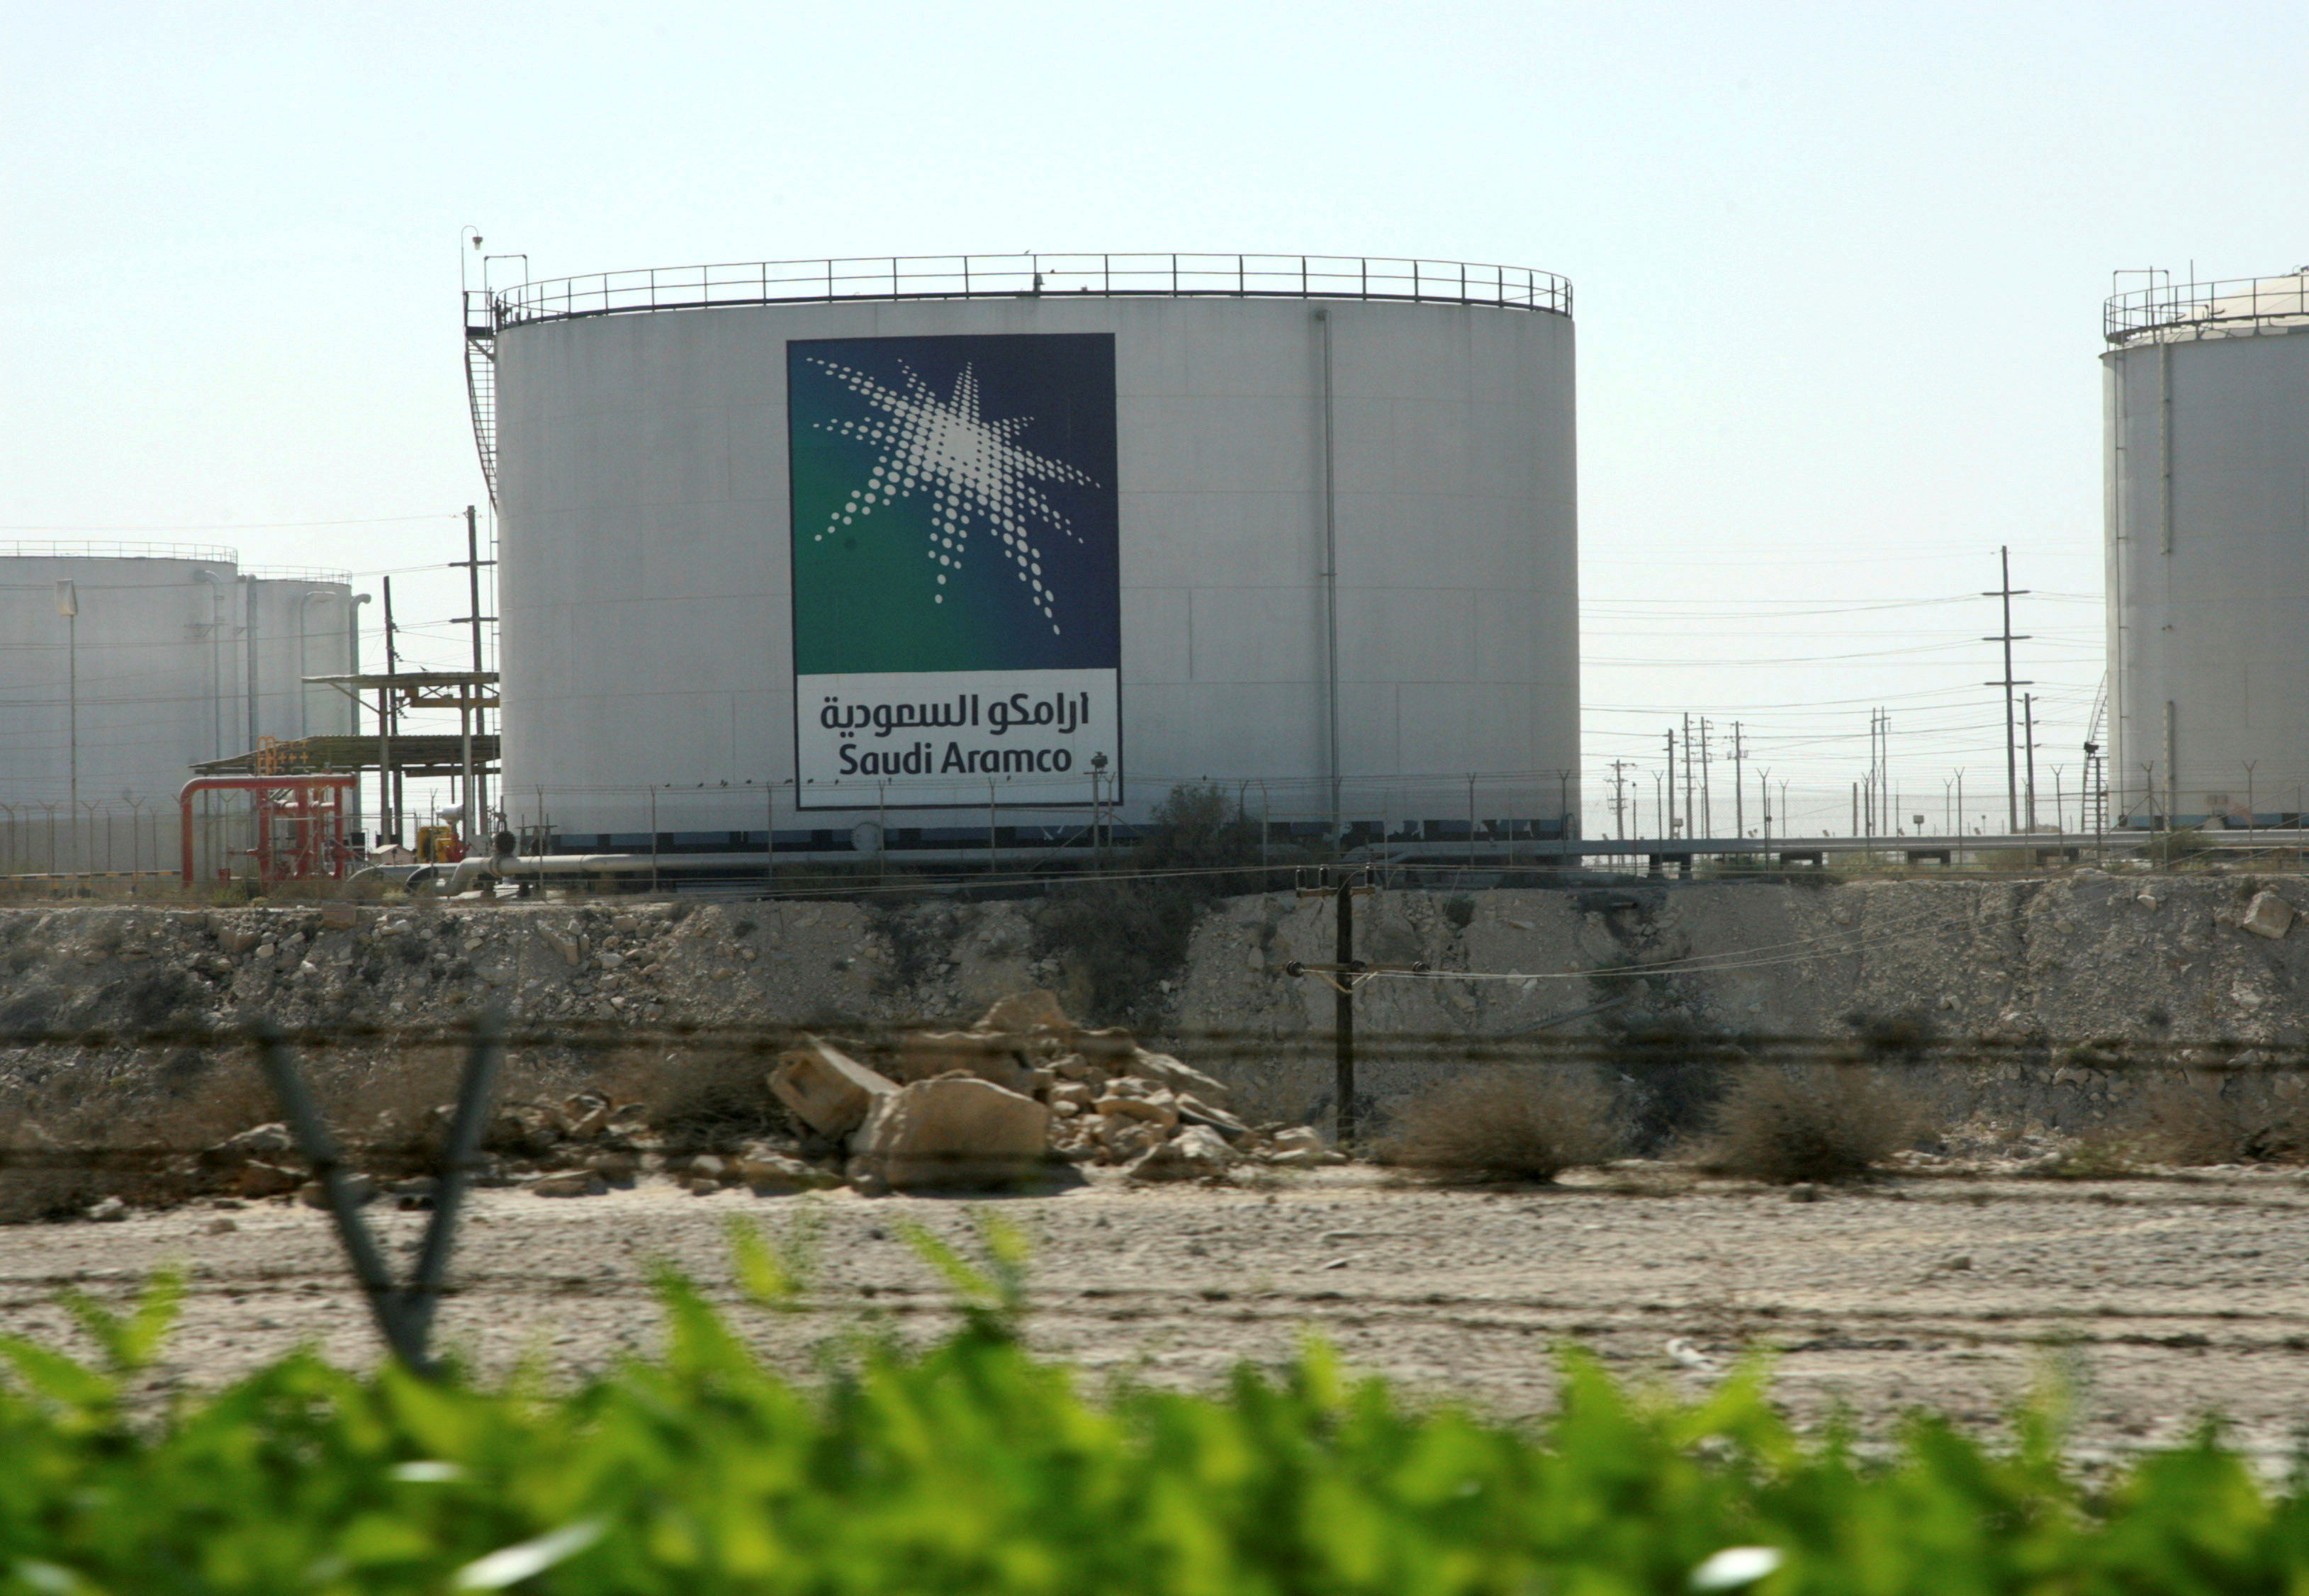 Saudi Arabia debating shape of Aramco ahead of stake sale